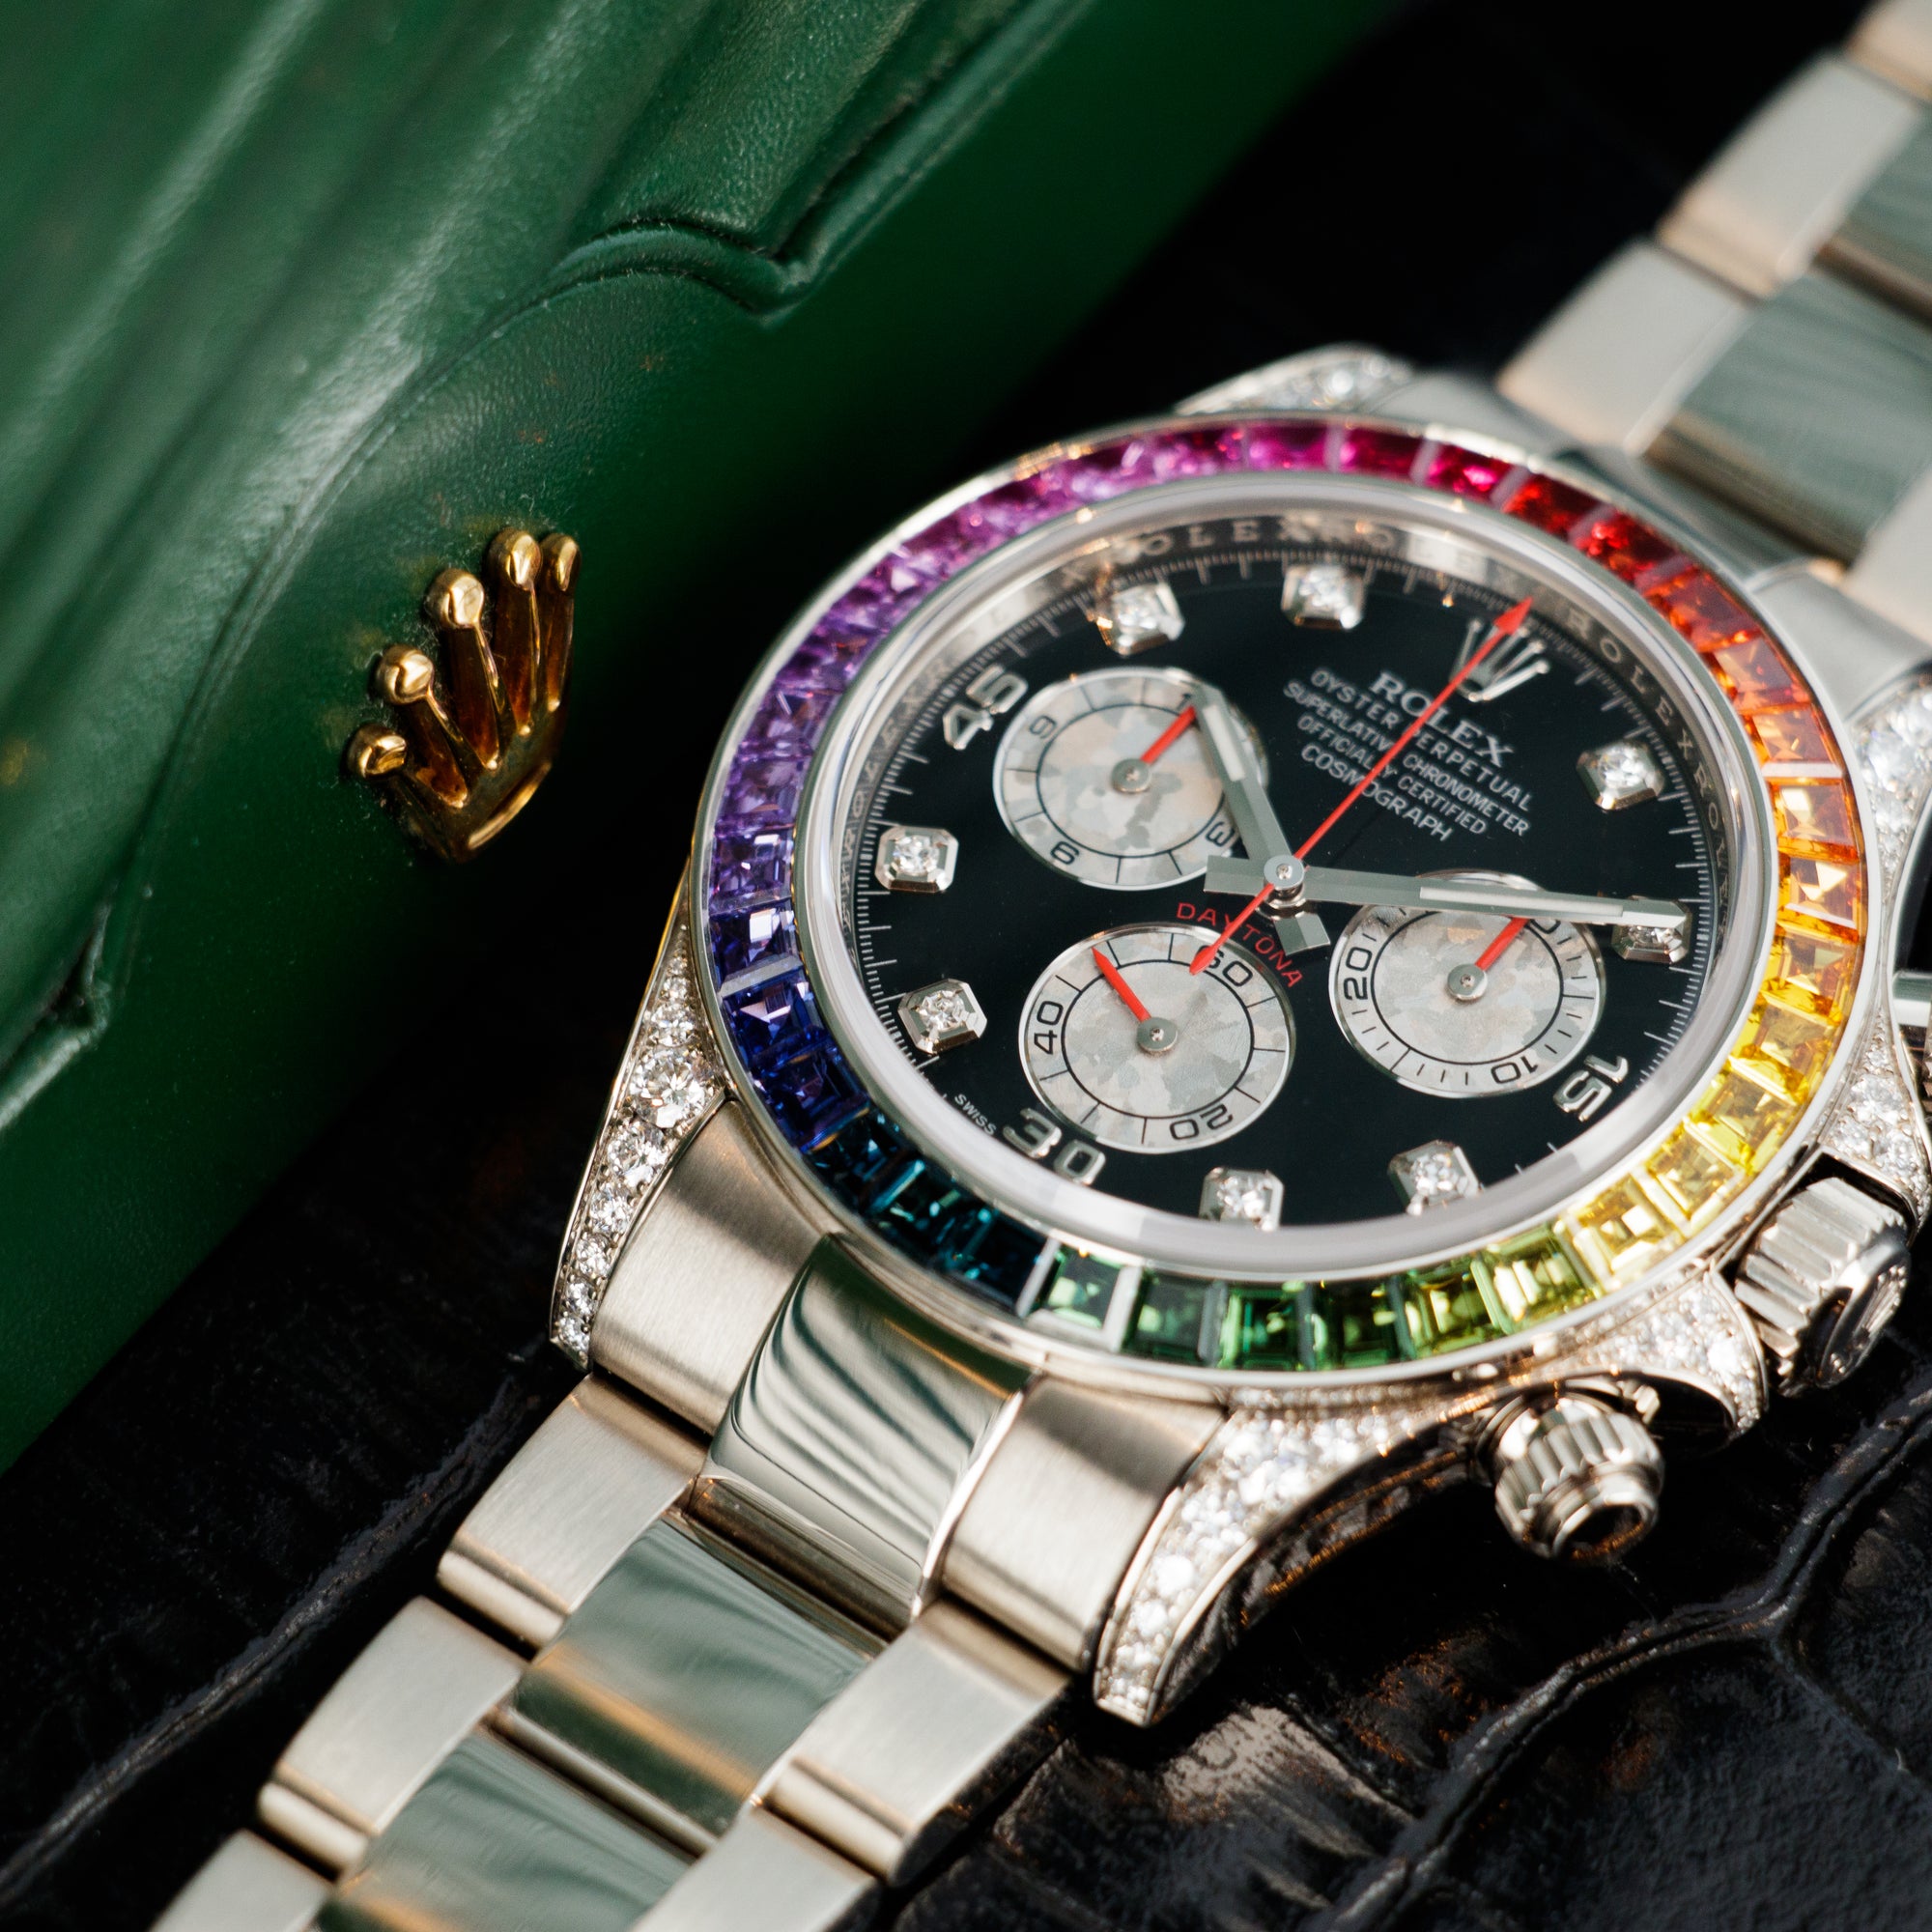 Rolex - Rolex White Gold Rainbow Daytona Watch Ref. 116599 - The Keystone Watches